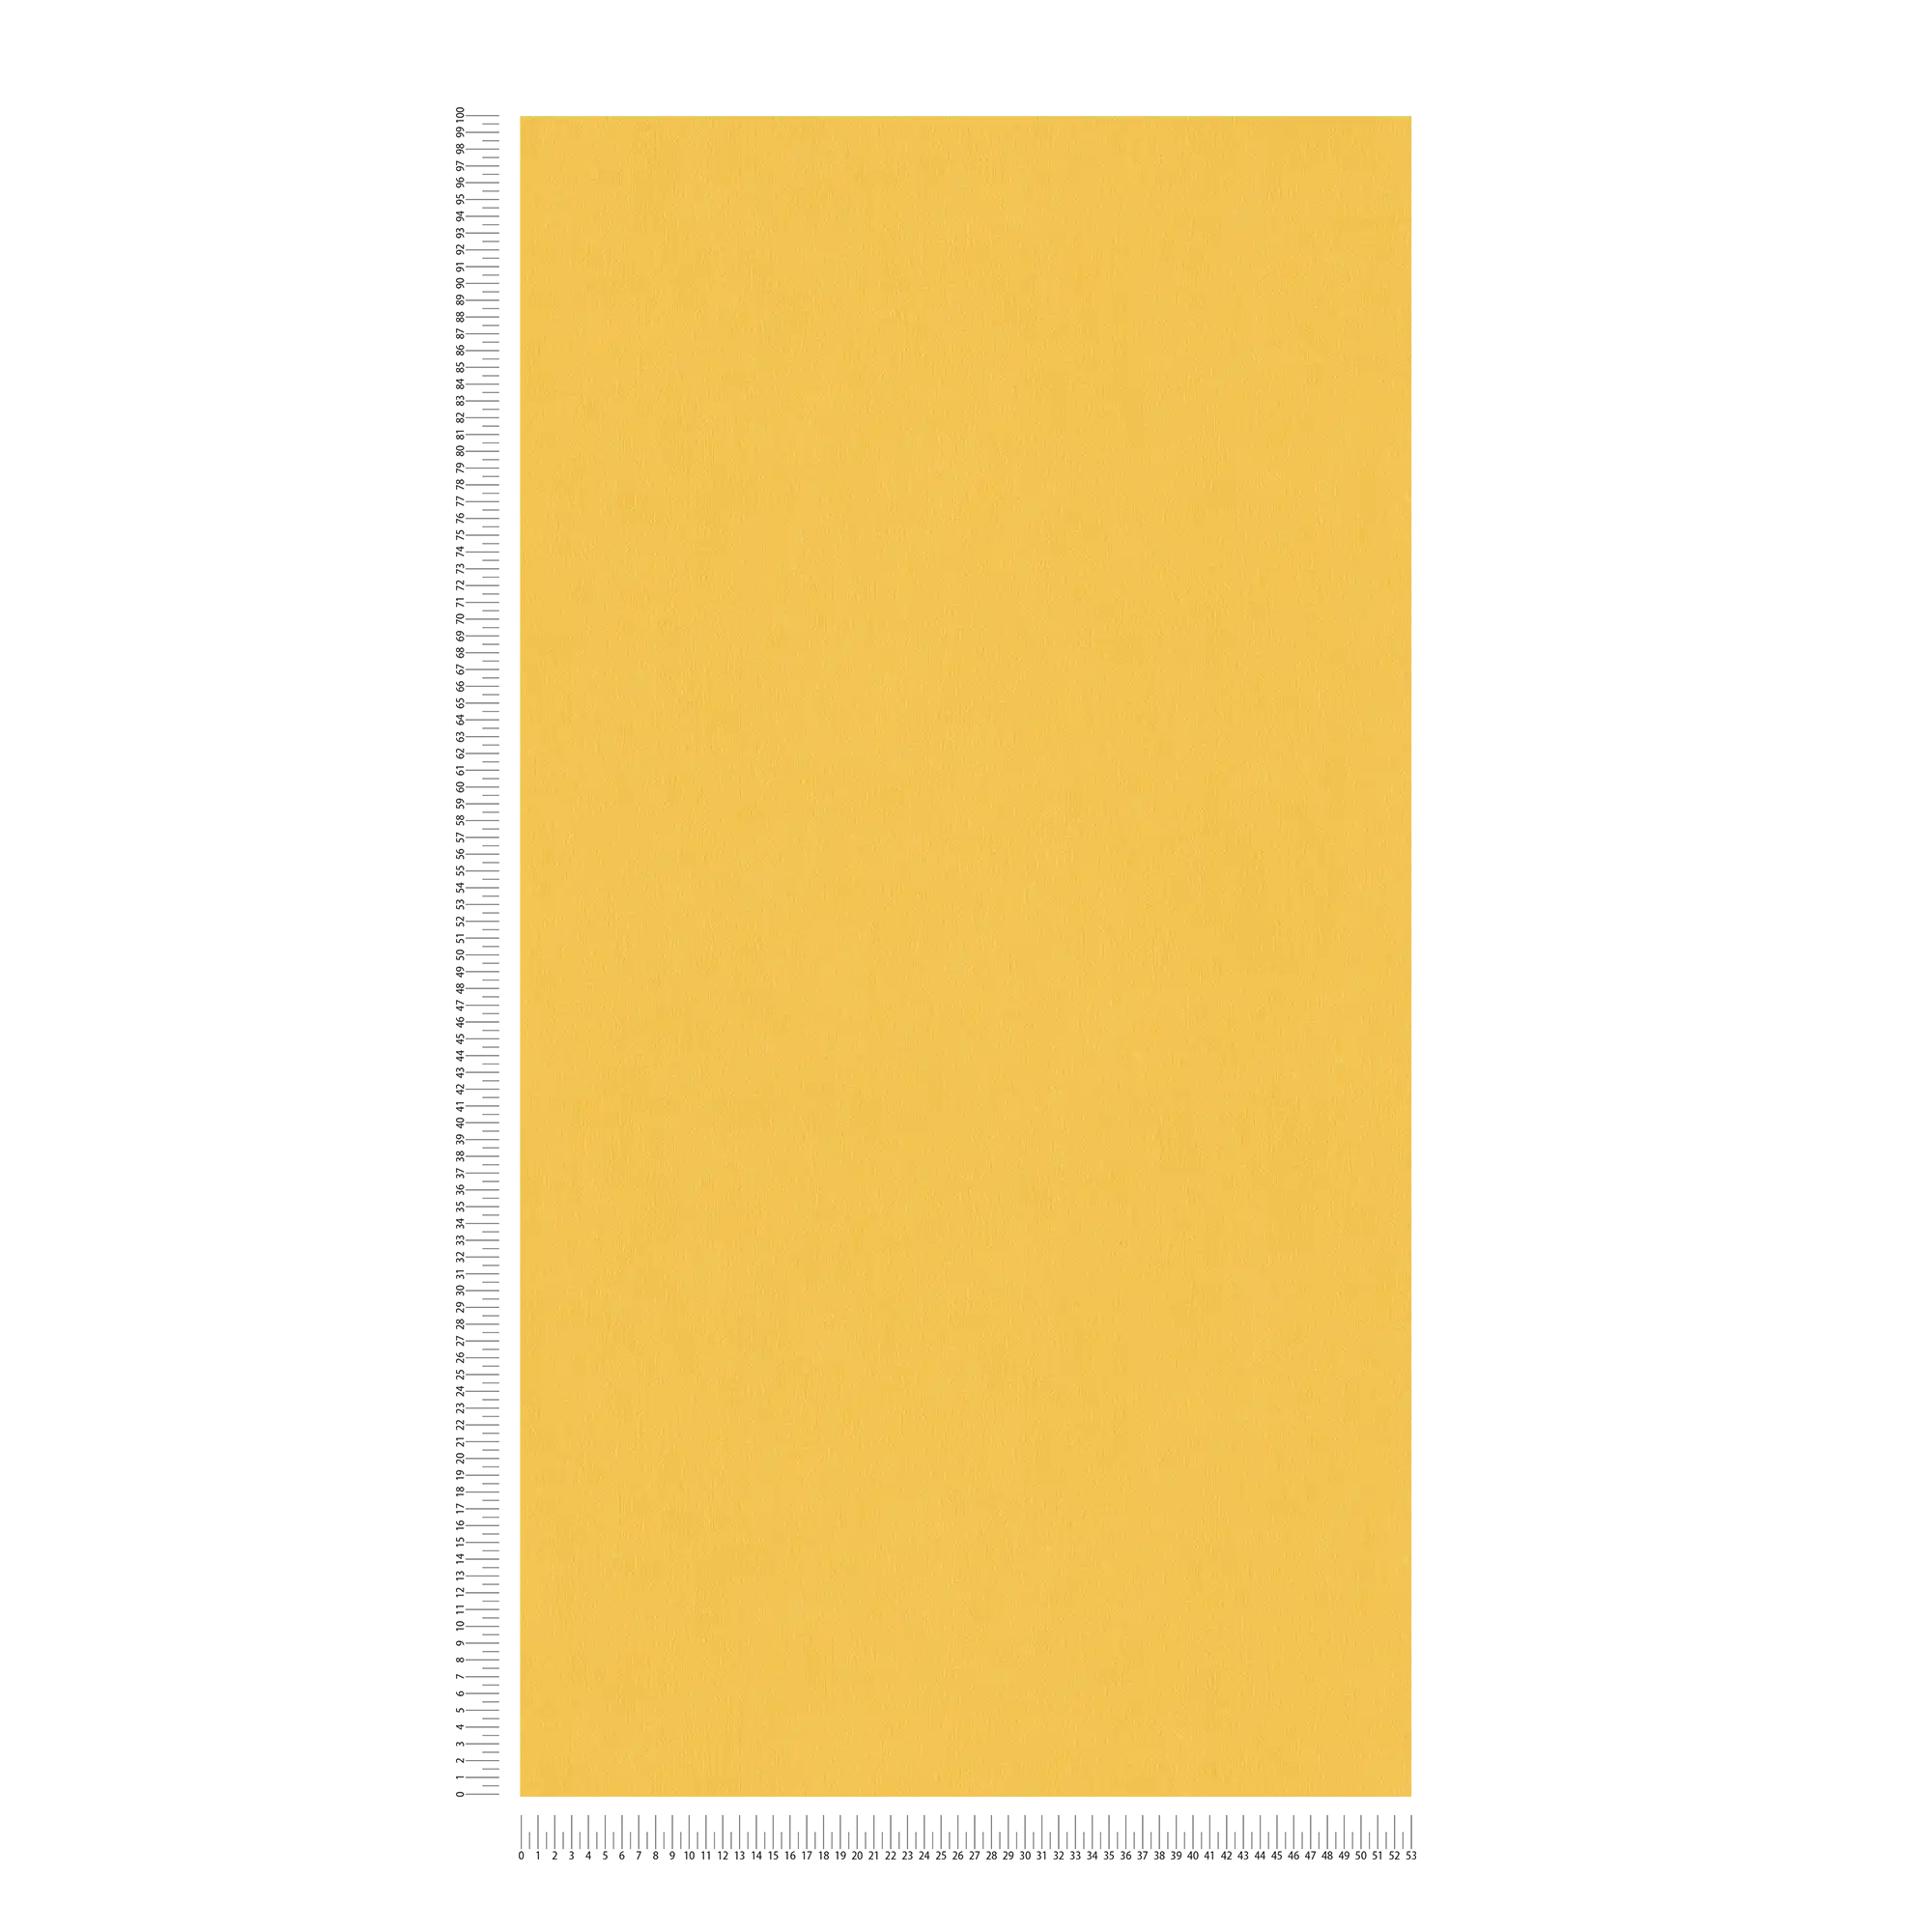             Papel pintado amarillo mostaza liso para guardería - Amarillo
        